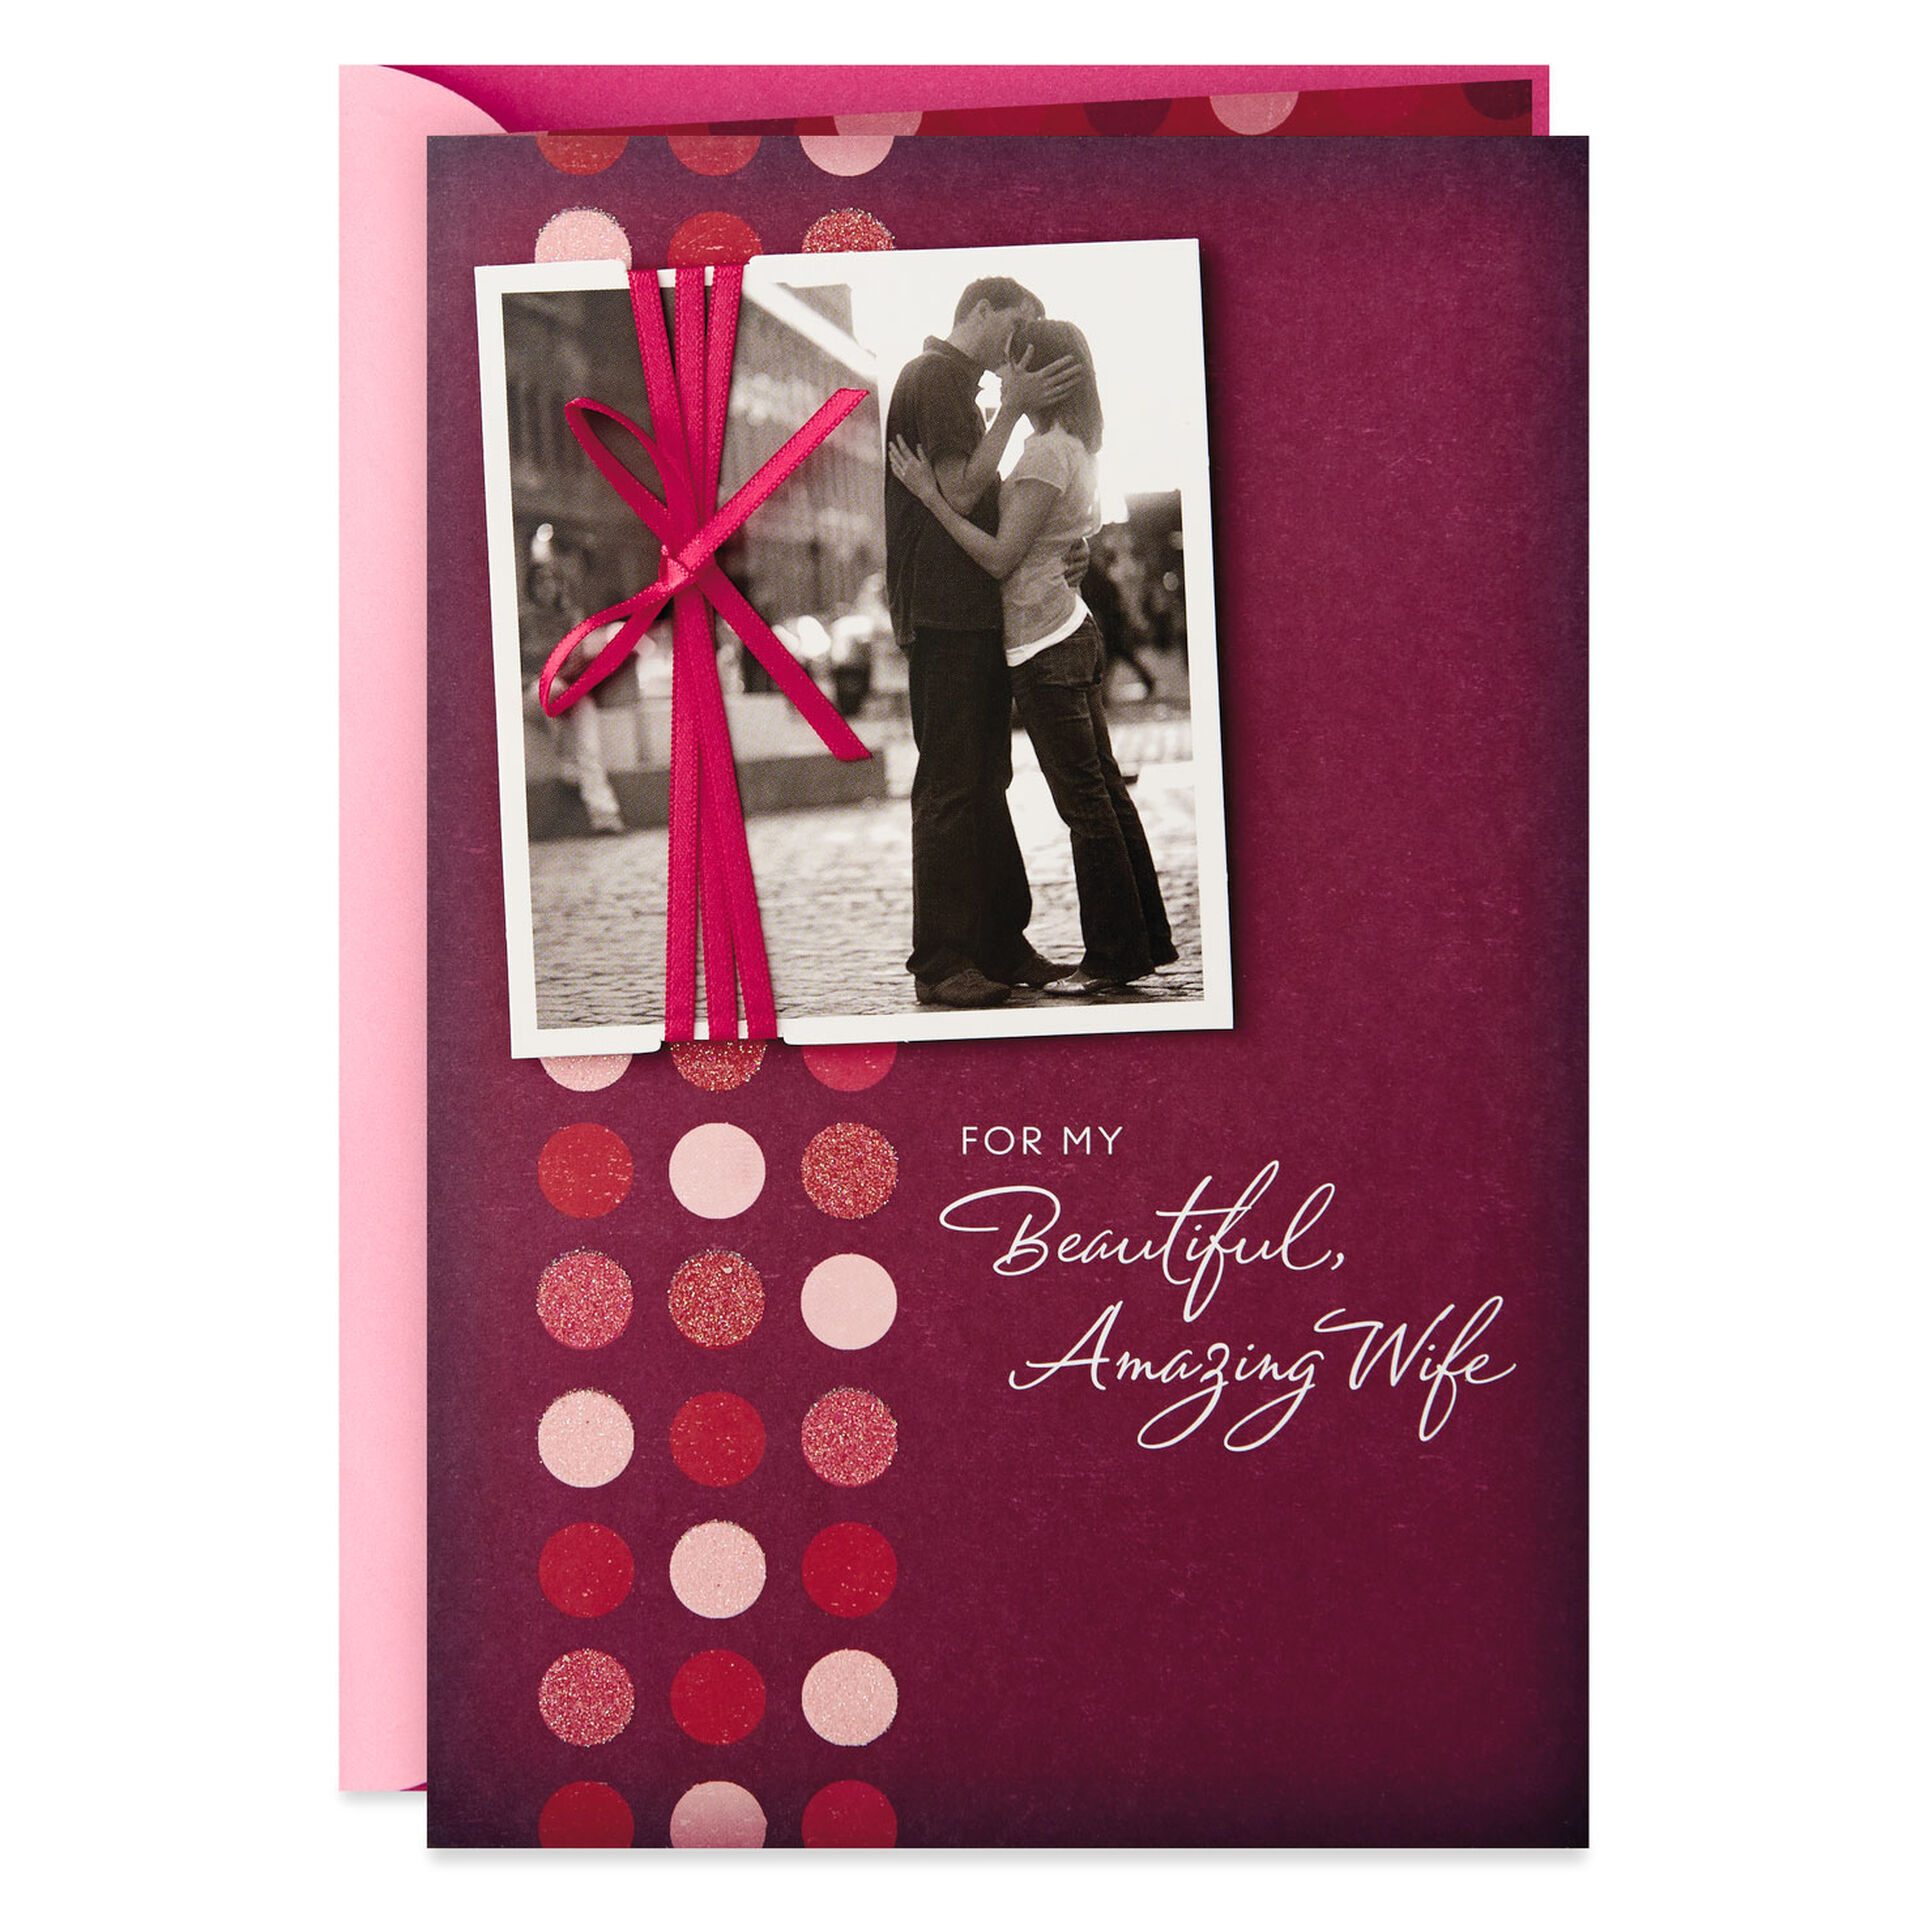 90A WIFE BIRTHDAY CARD Happy Birthday with LOVE ROMANTIC 15 to Choice Hallmark 